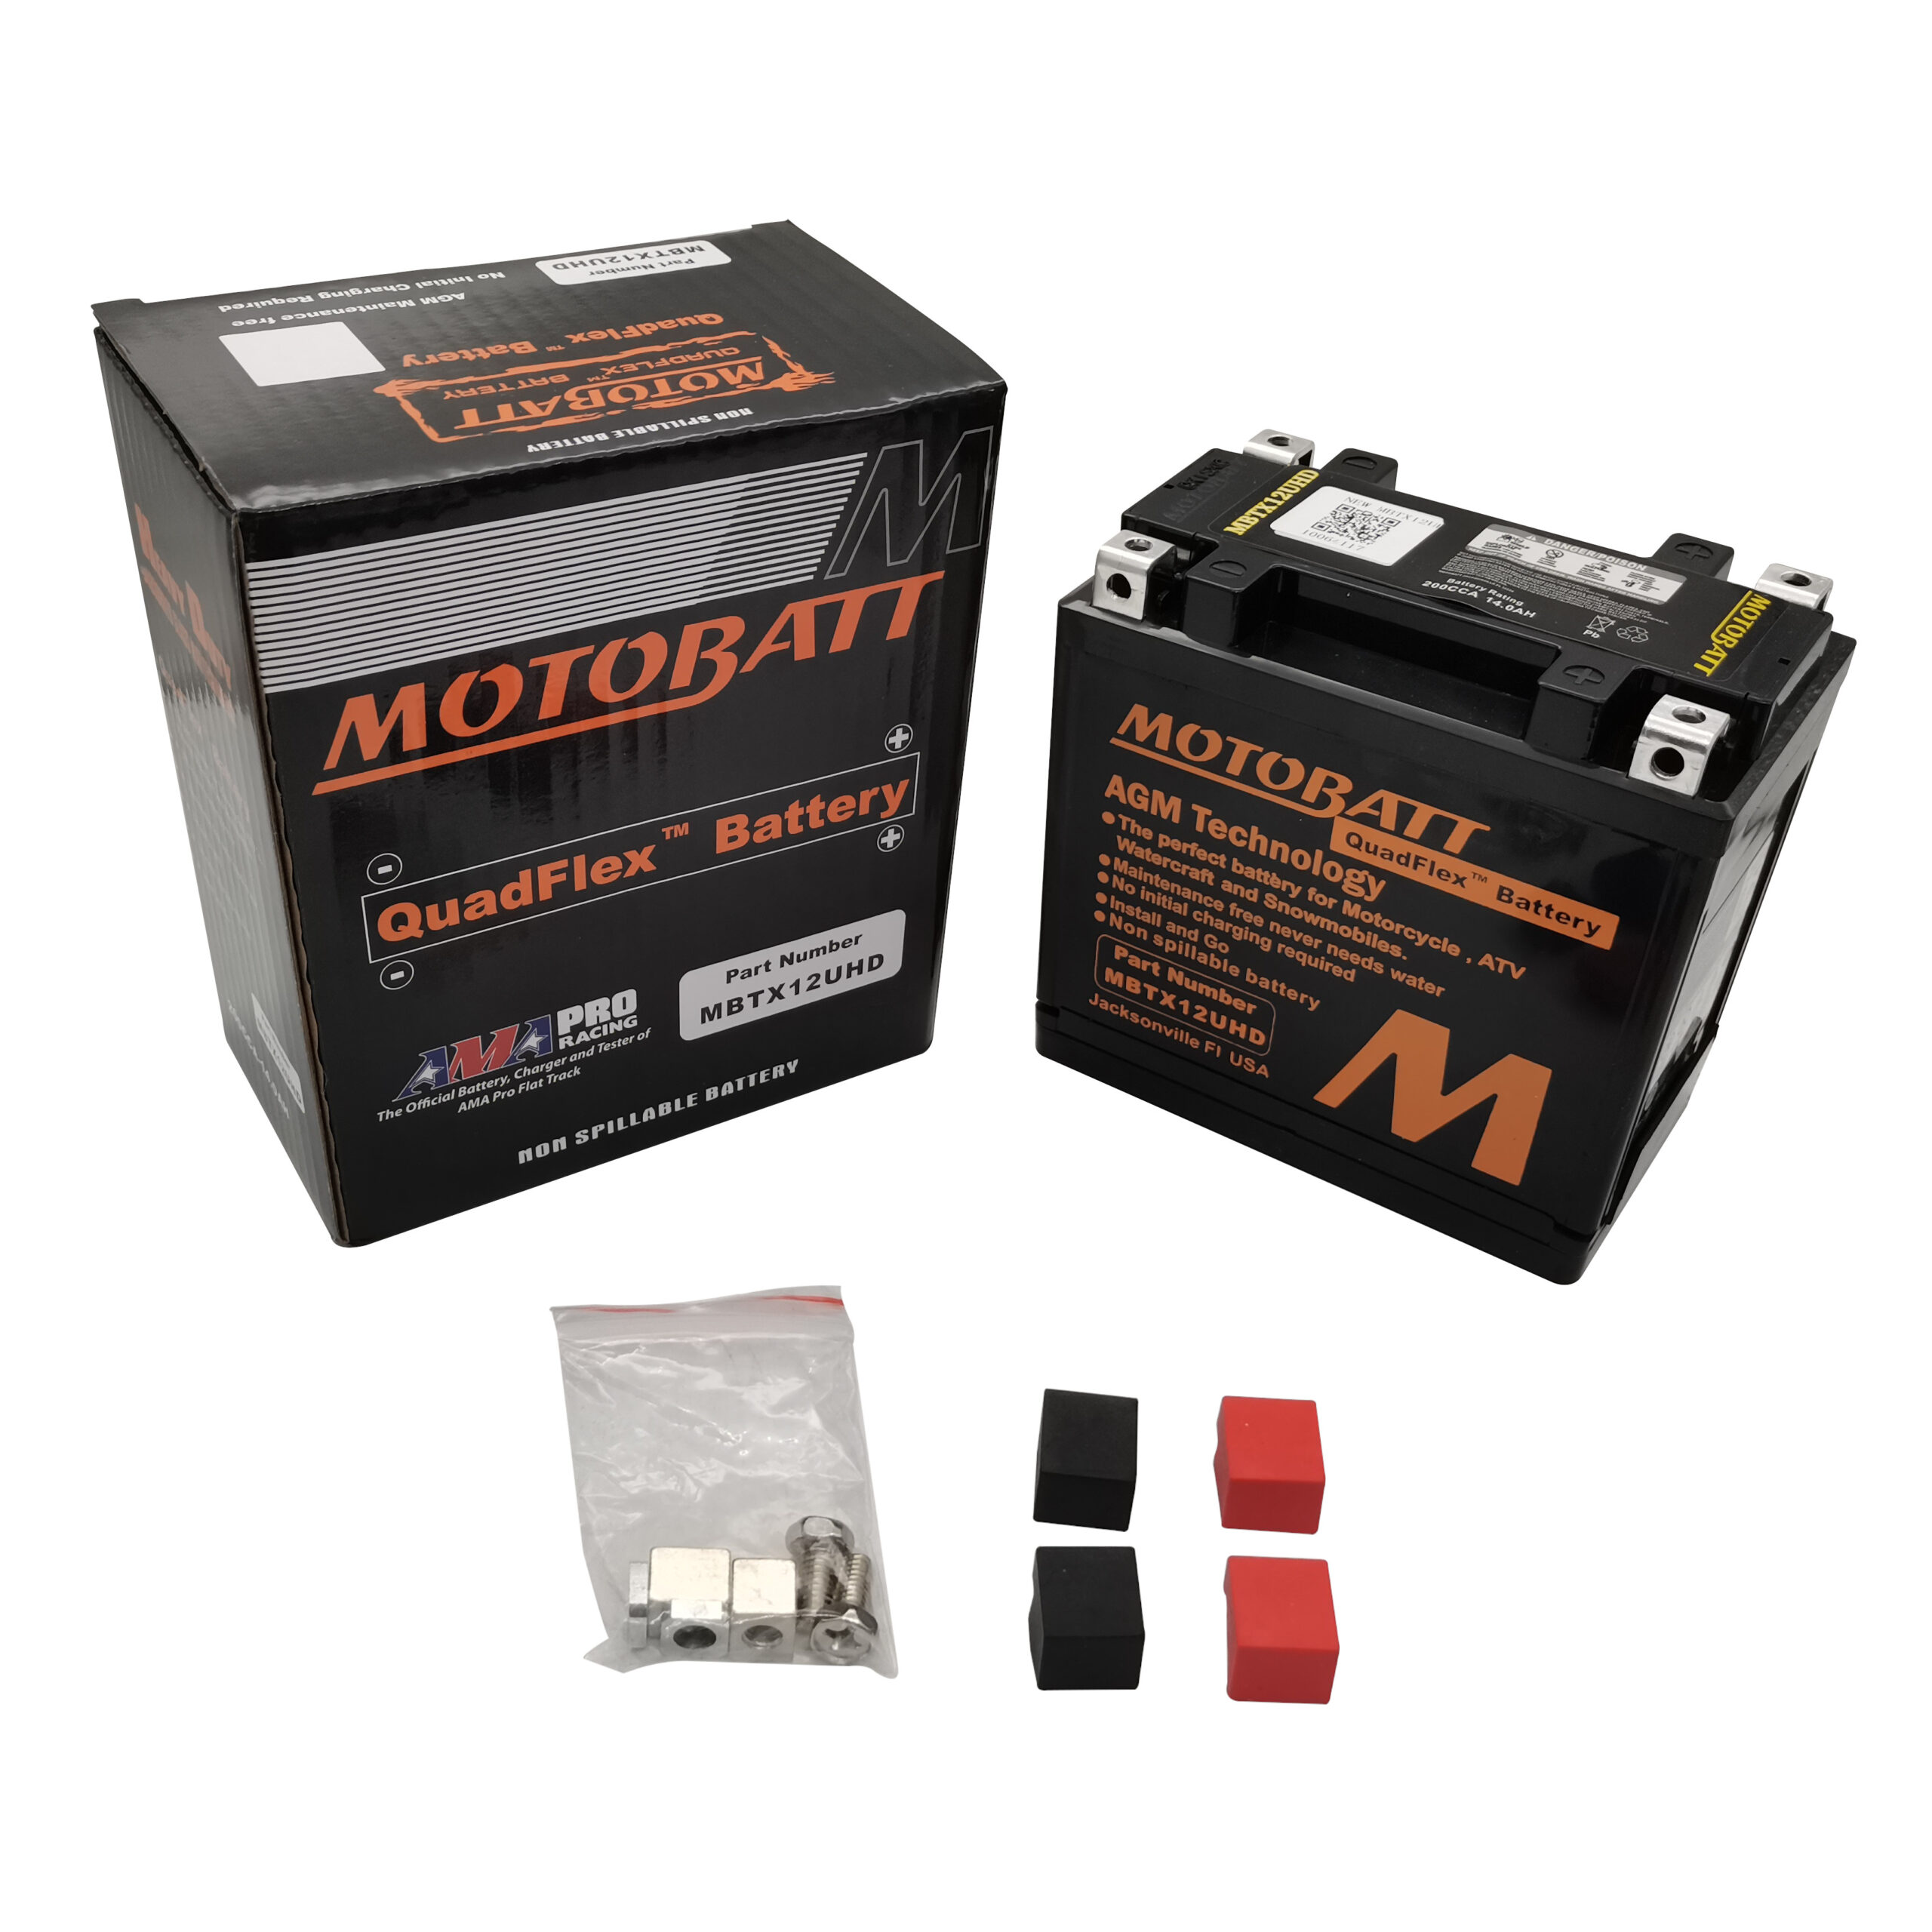 Motobatt – QuadFlex – MBTX12U HD – 14 Ah